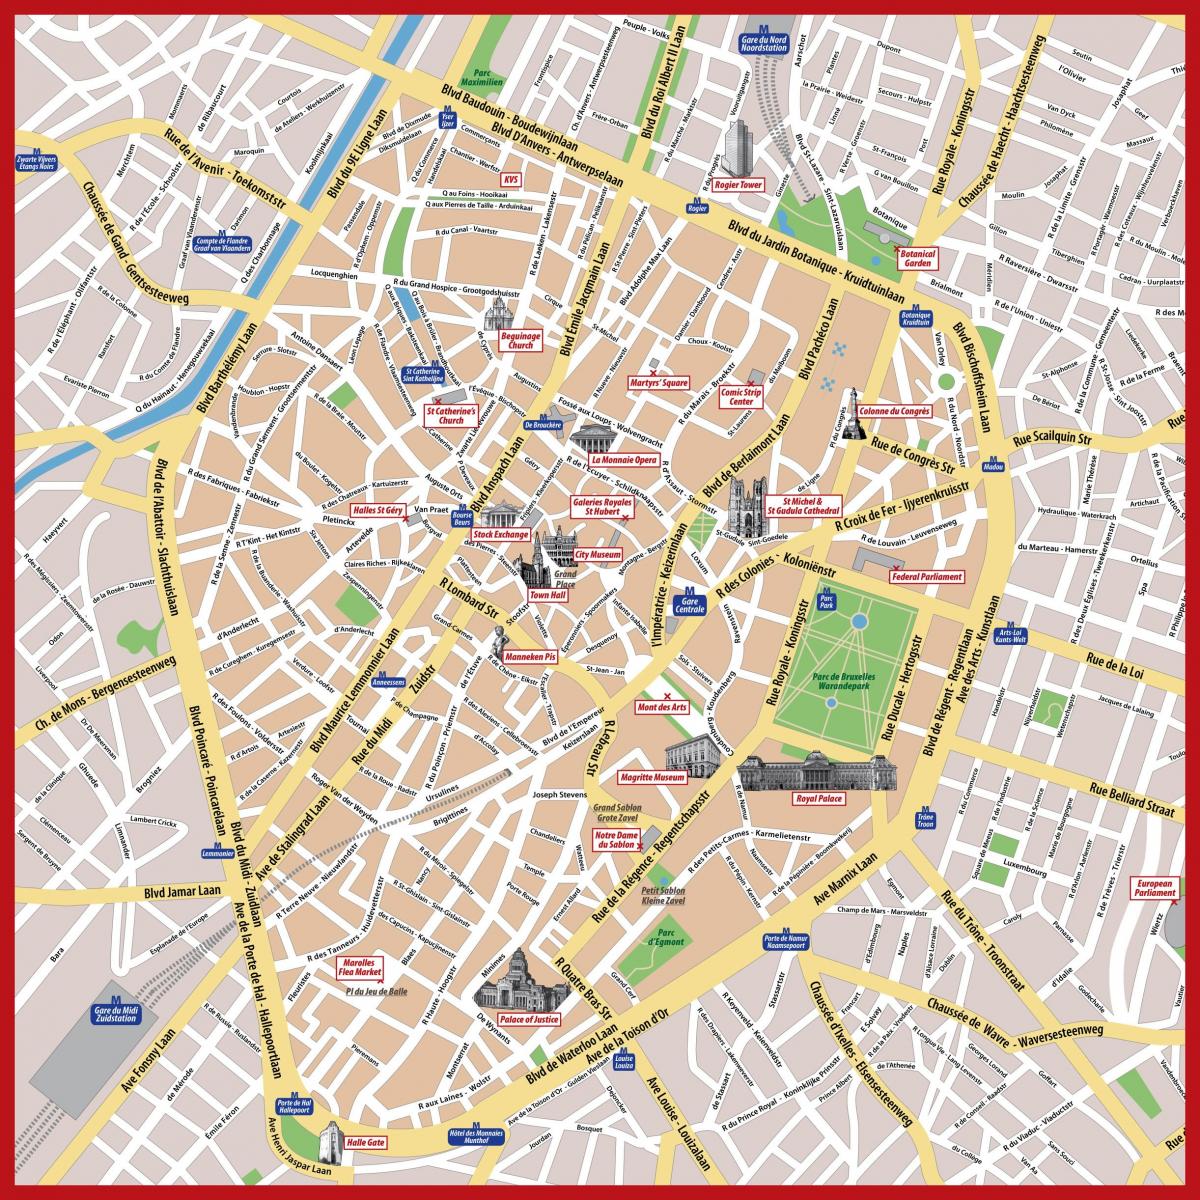 Brussels walking tours map